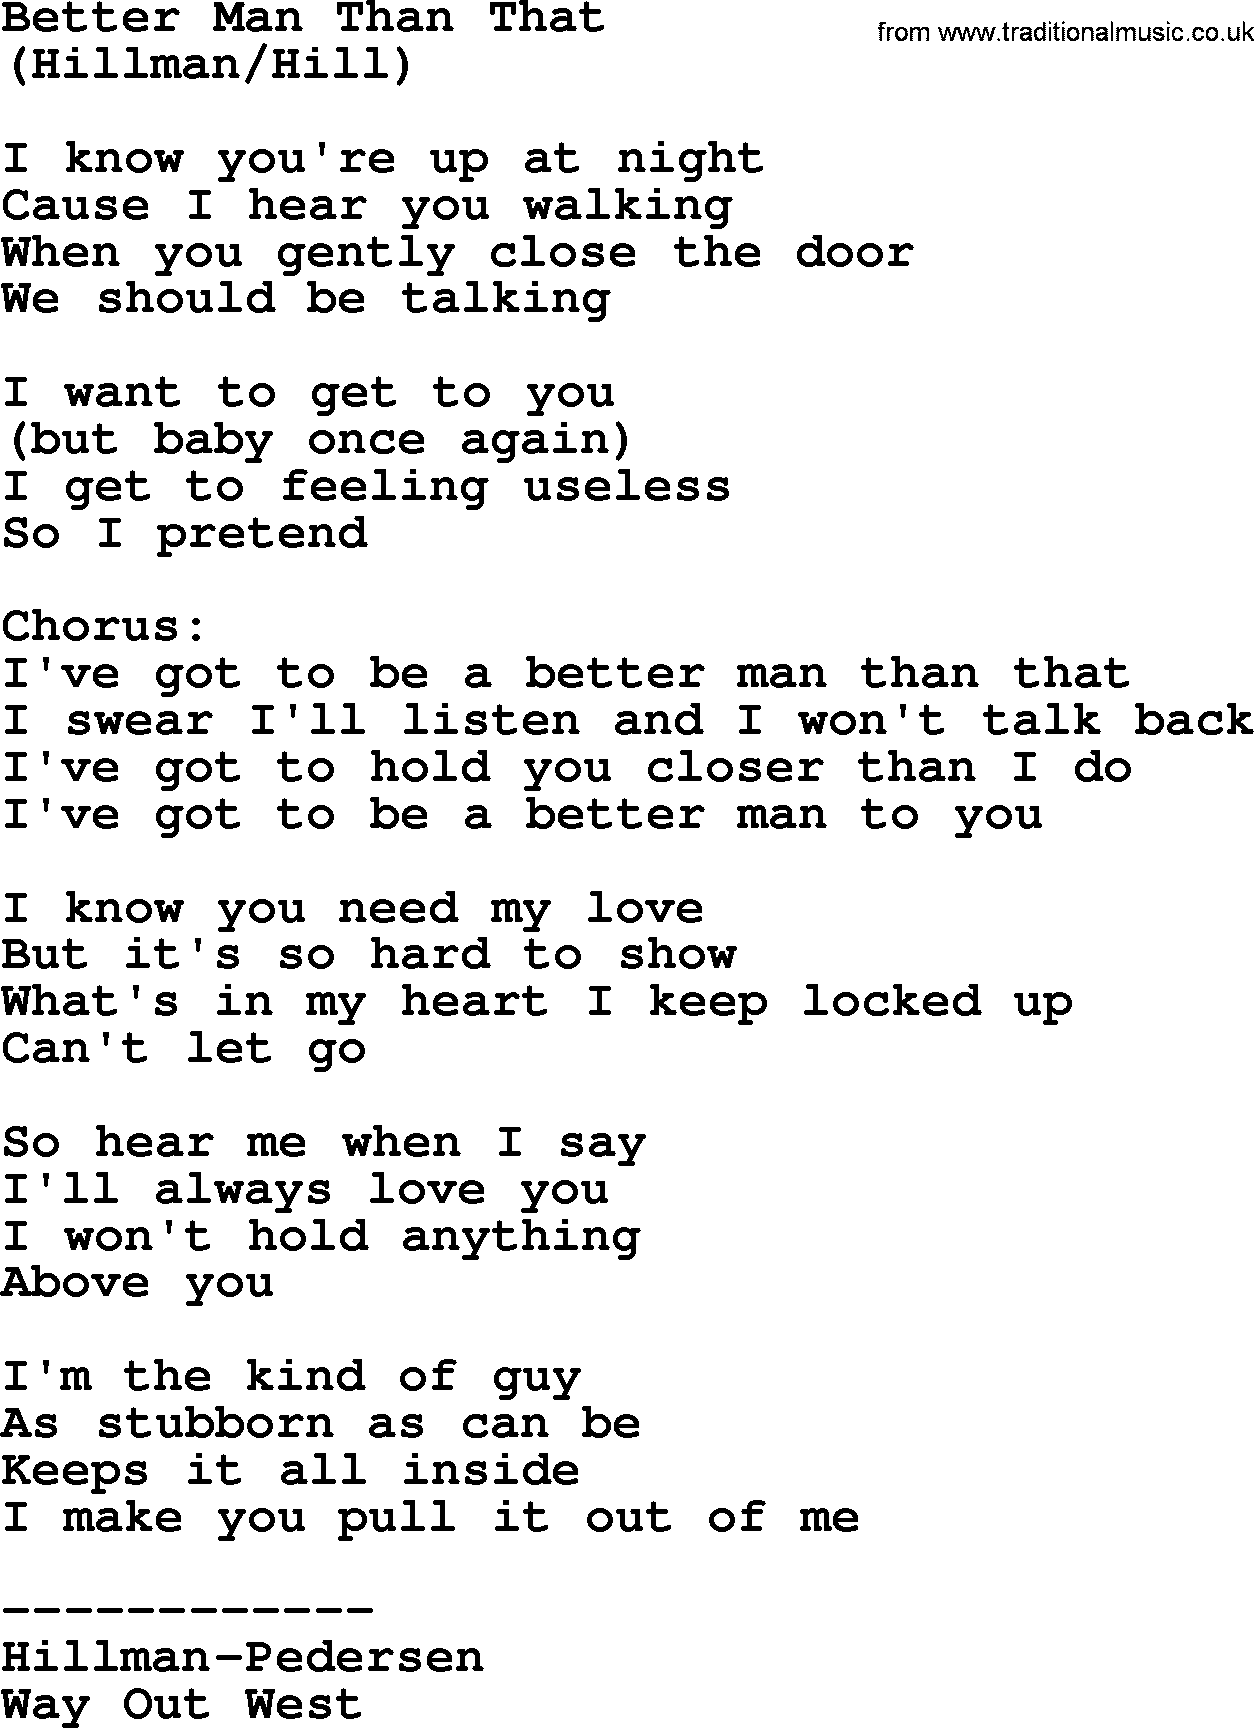 The Byrds song Better Man Than That, lyrics